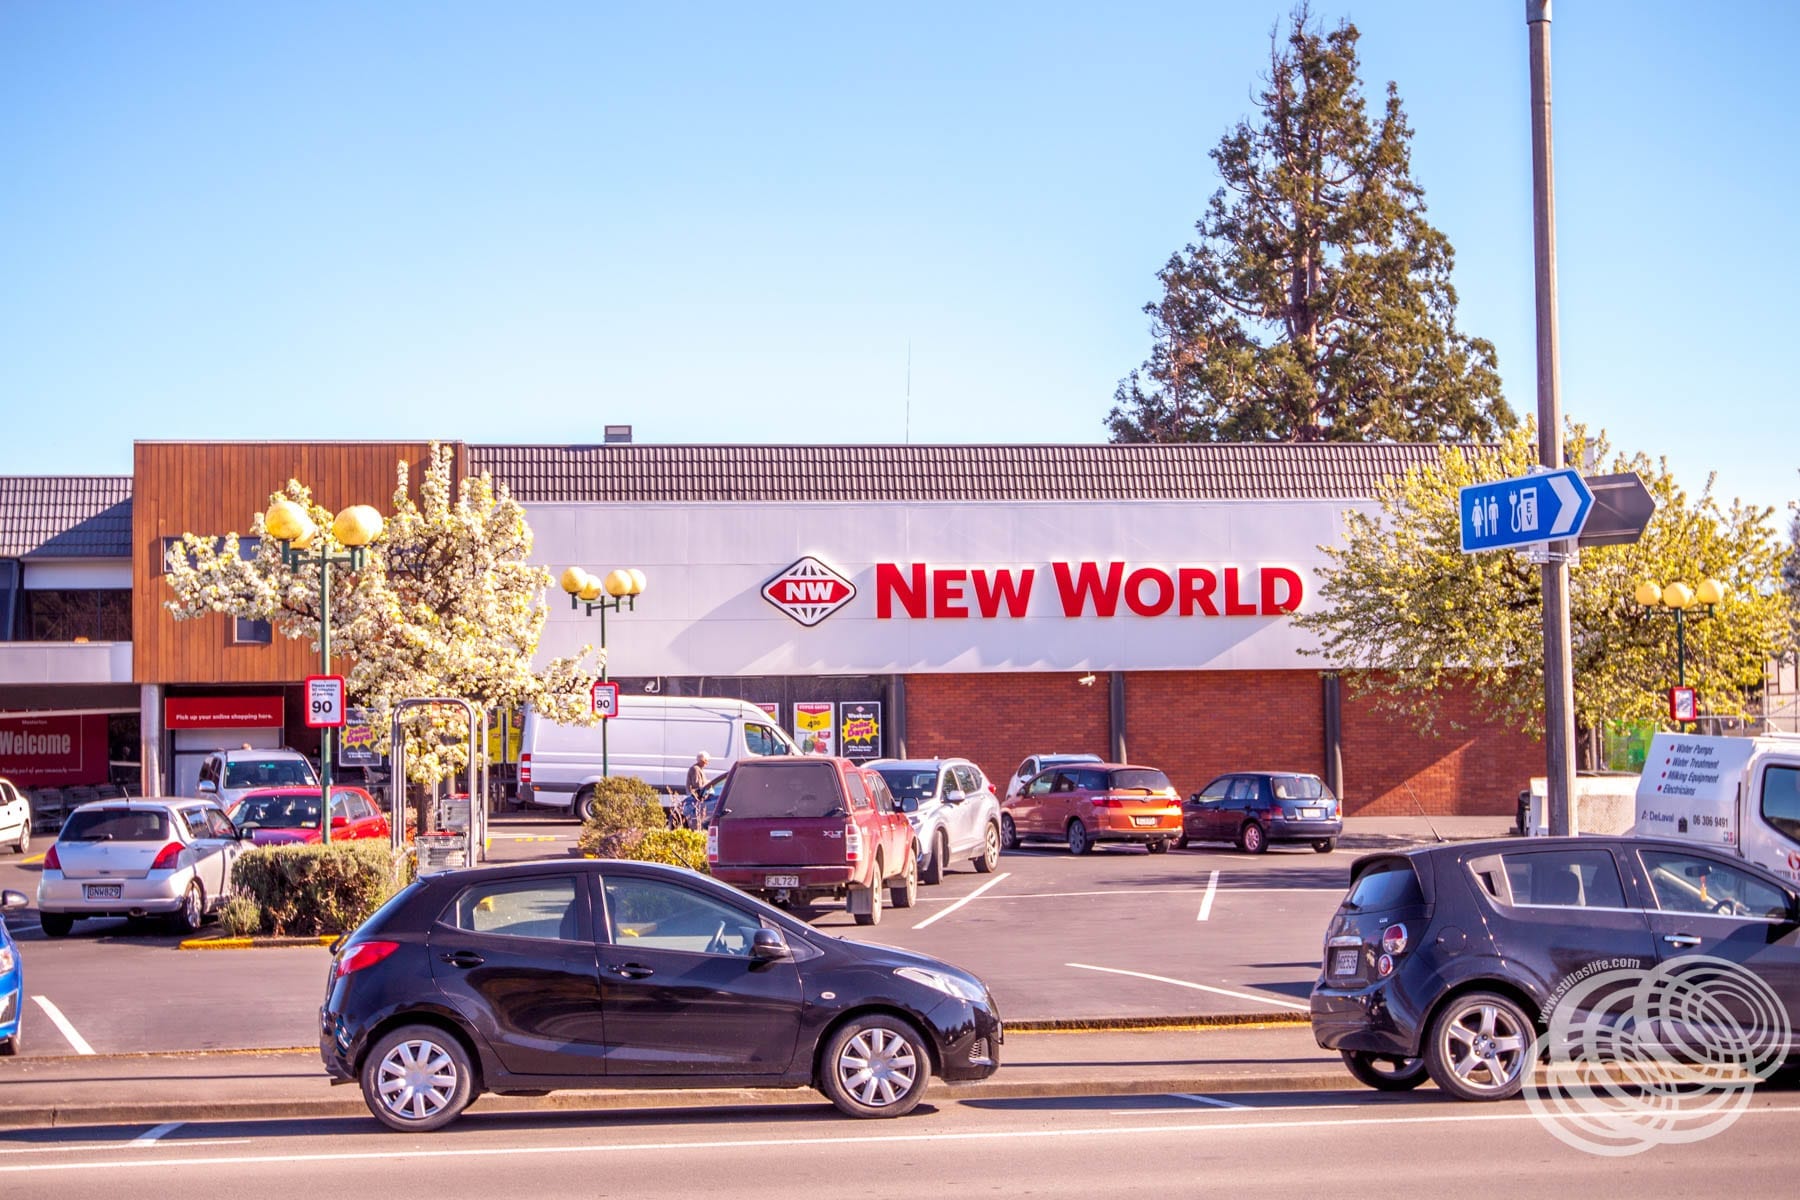 A New World Supermarket in Masterton